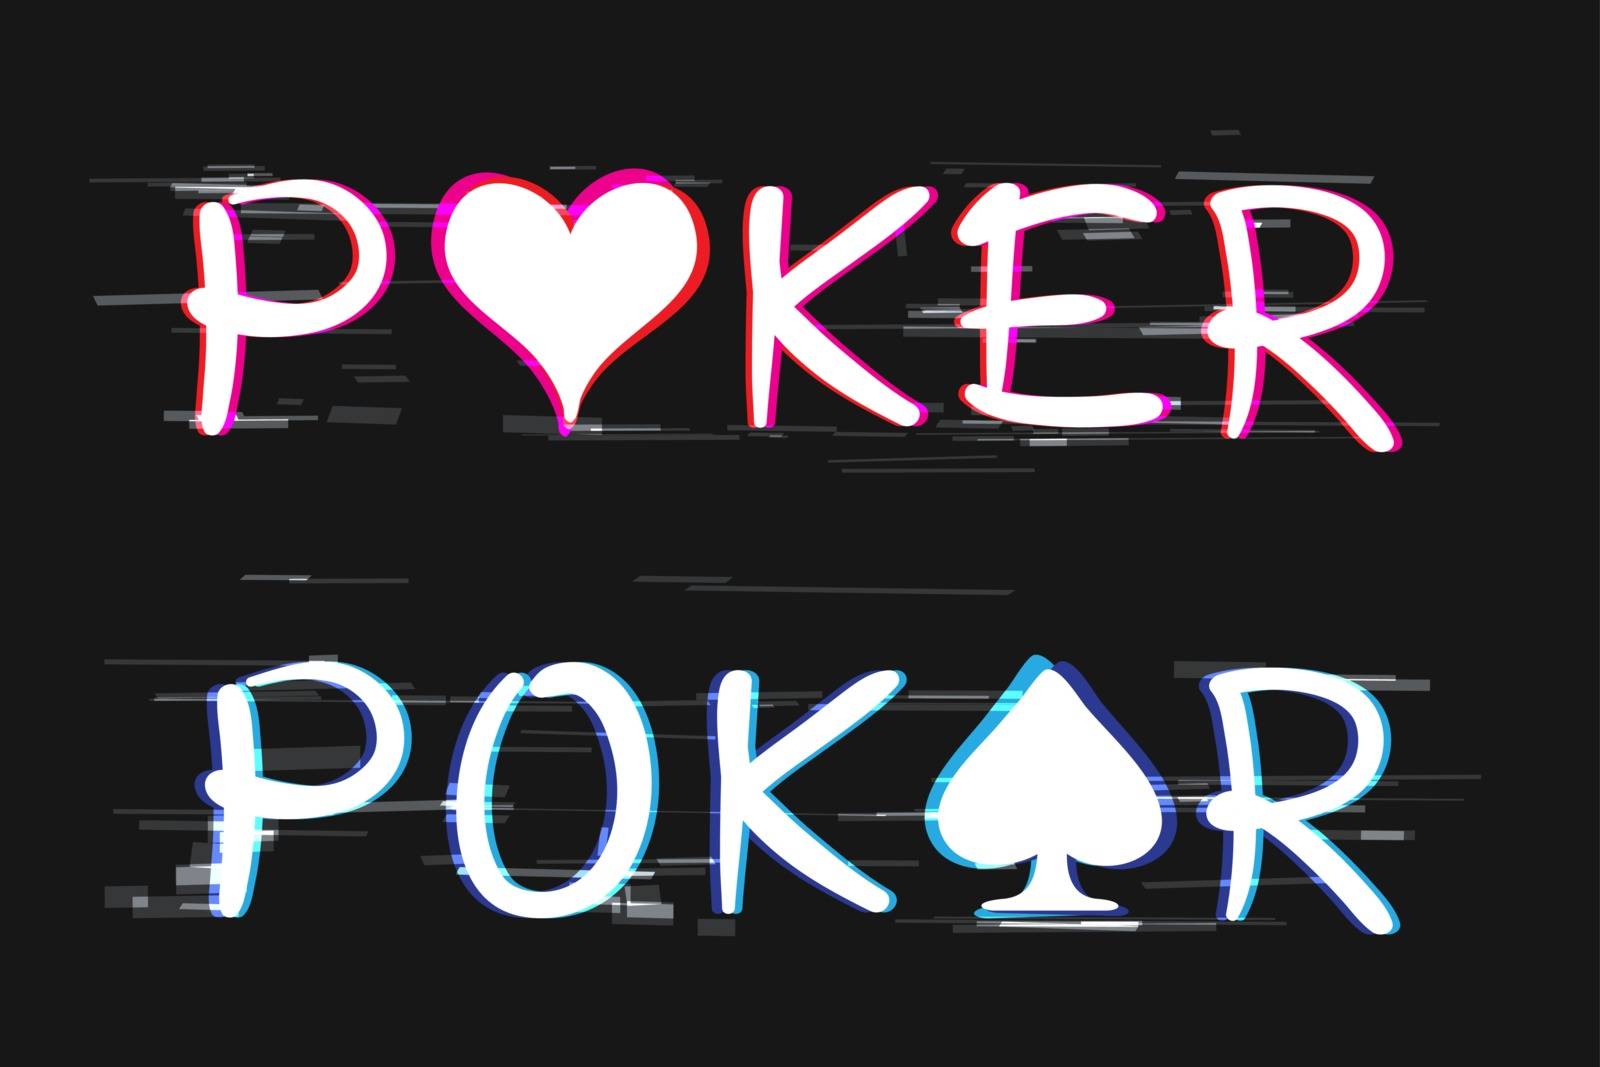 glitch poker logo text dark background by romvo